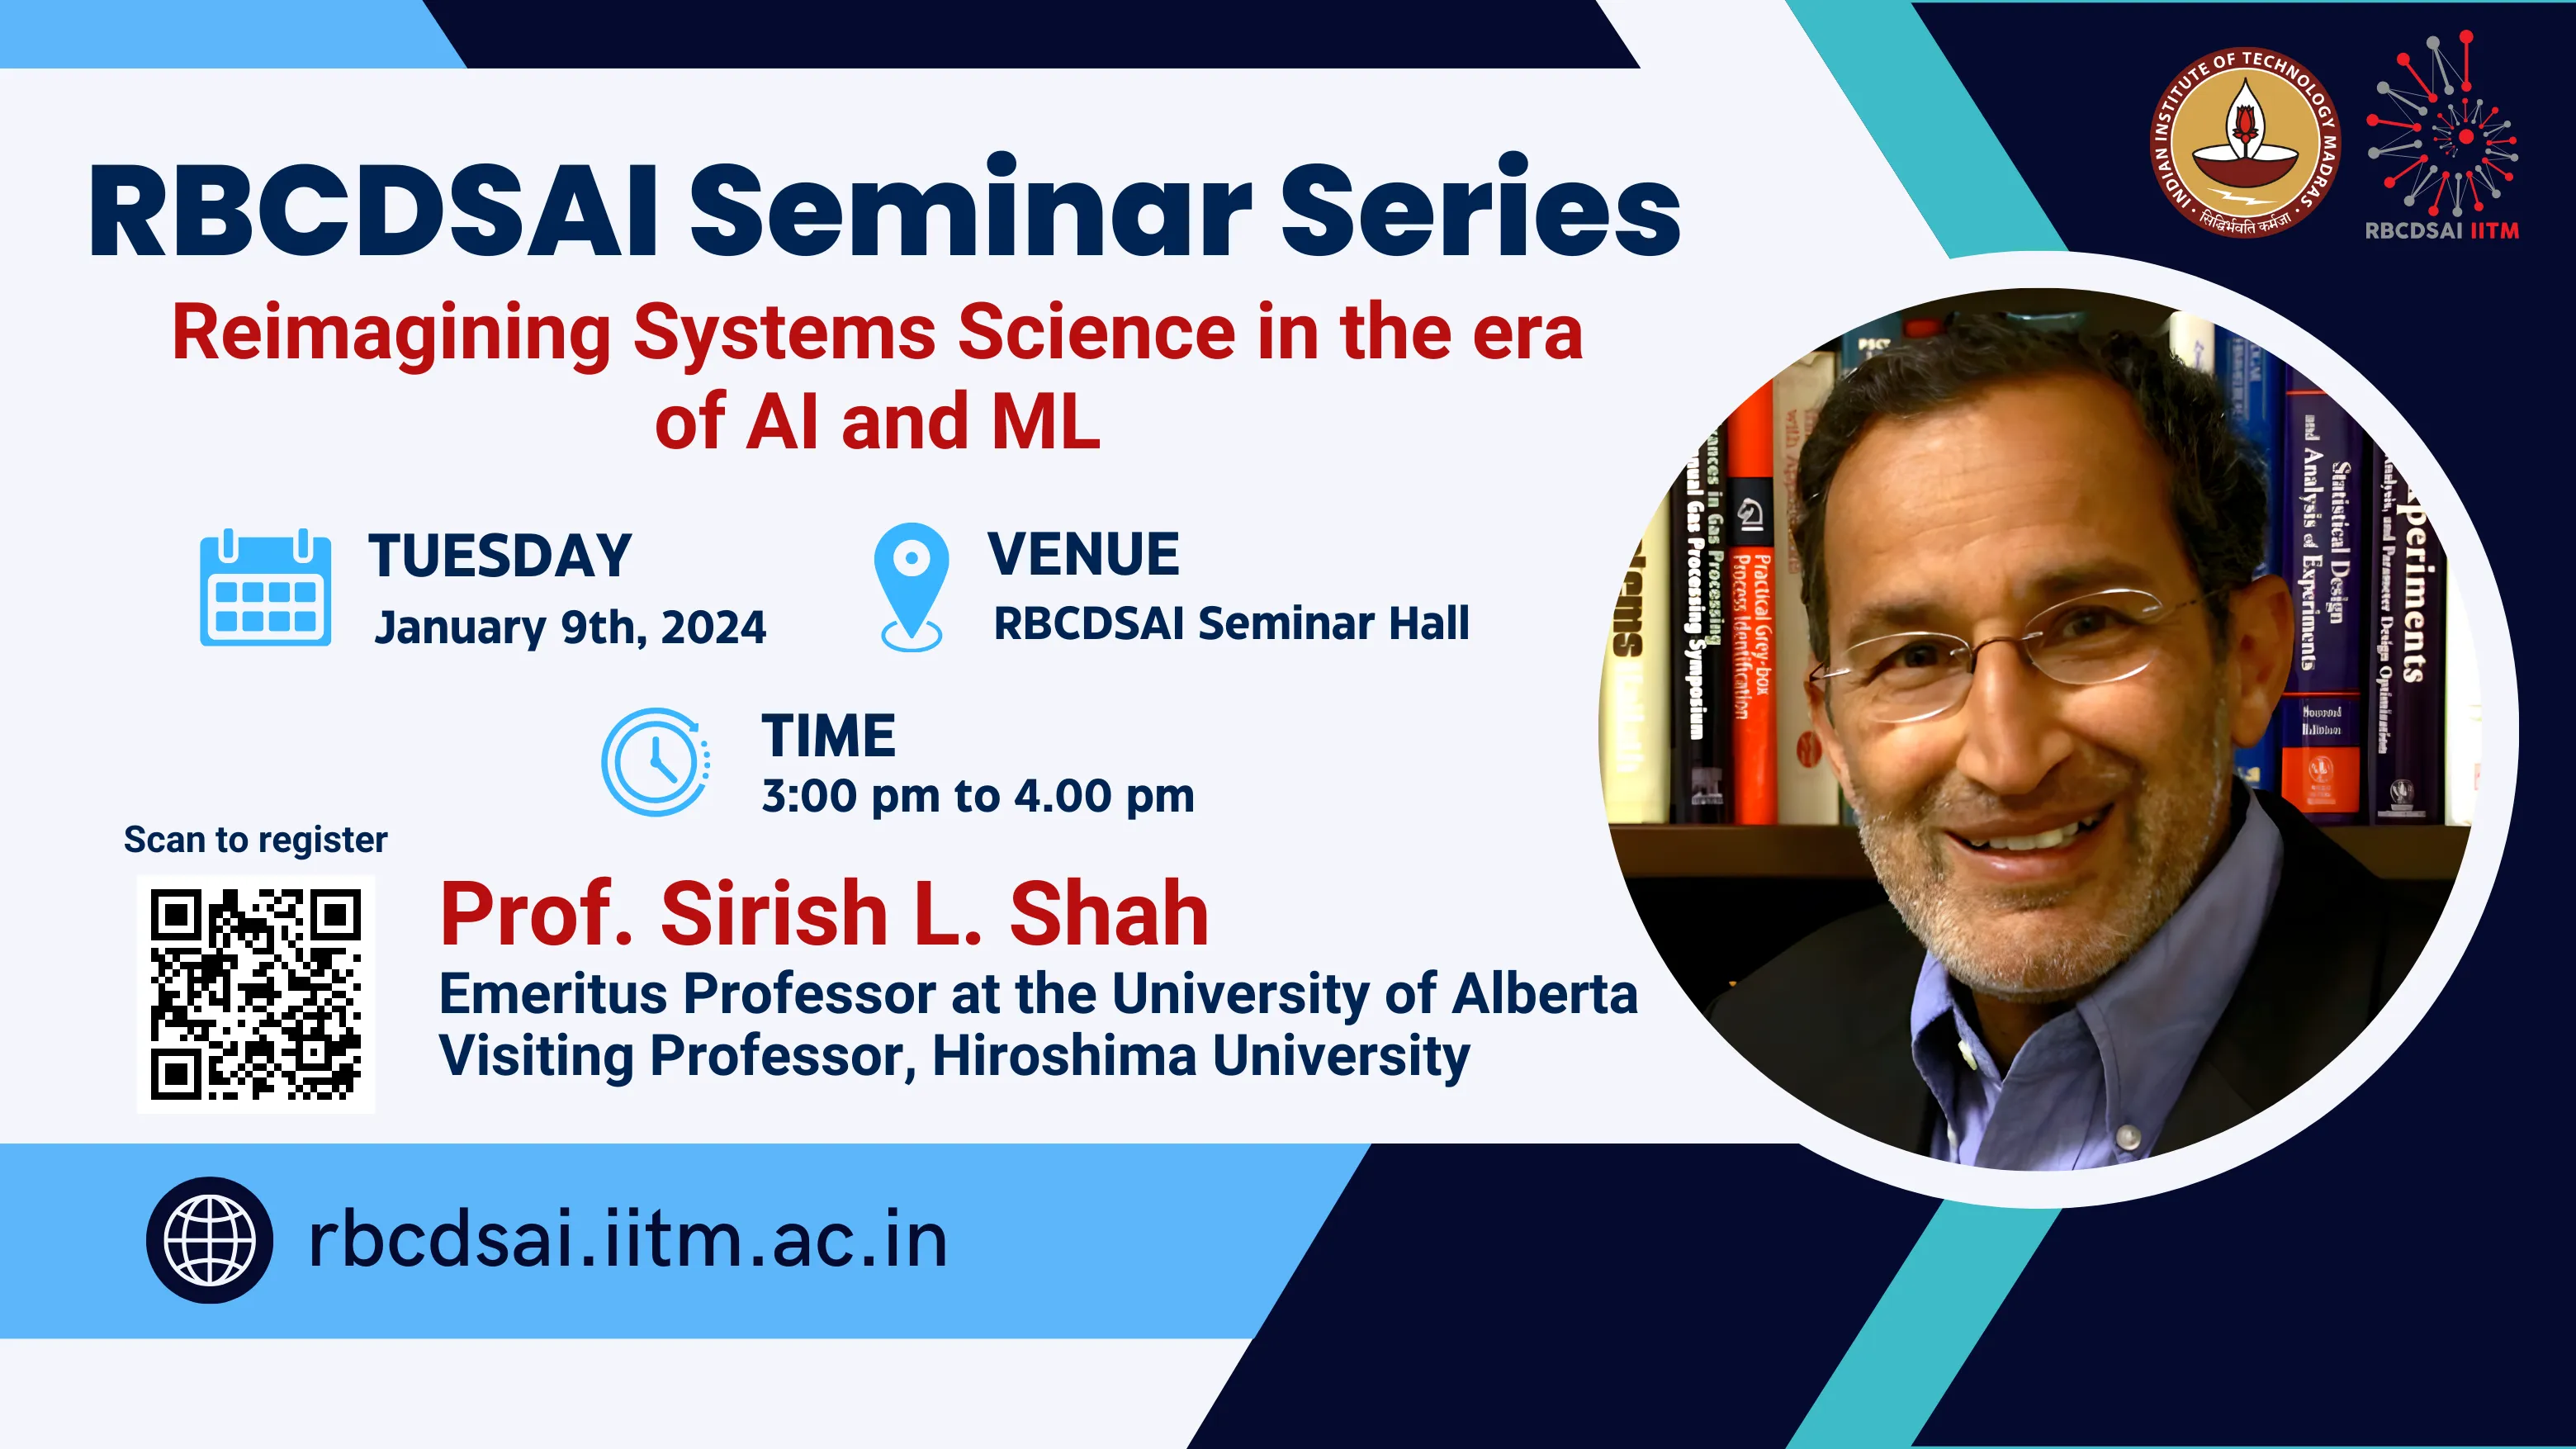 RBCDSAI Seminar Series by Prof. Sirish L. Shah